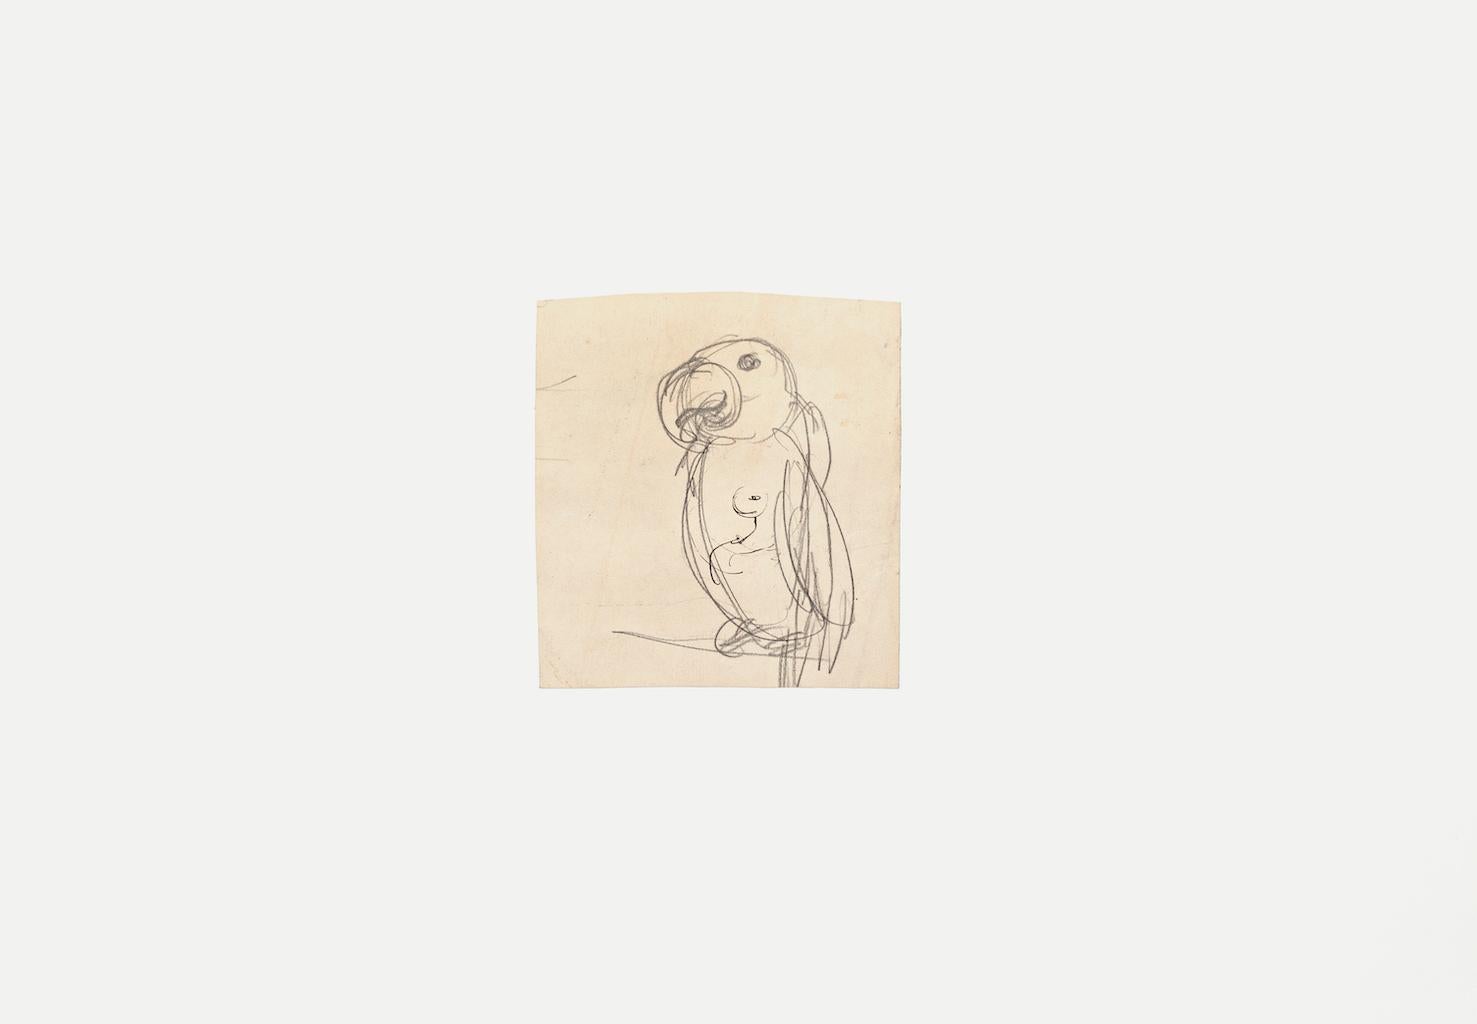 Parrot - Original Pencil on Paper by G. Galantara - Late 19th Century - Art by Gabriele Galantara